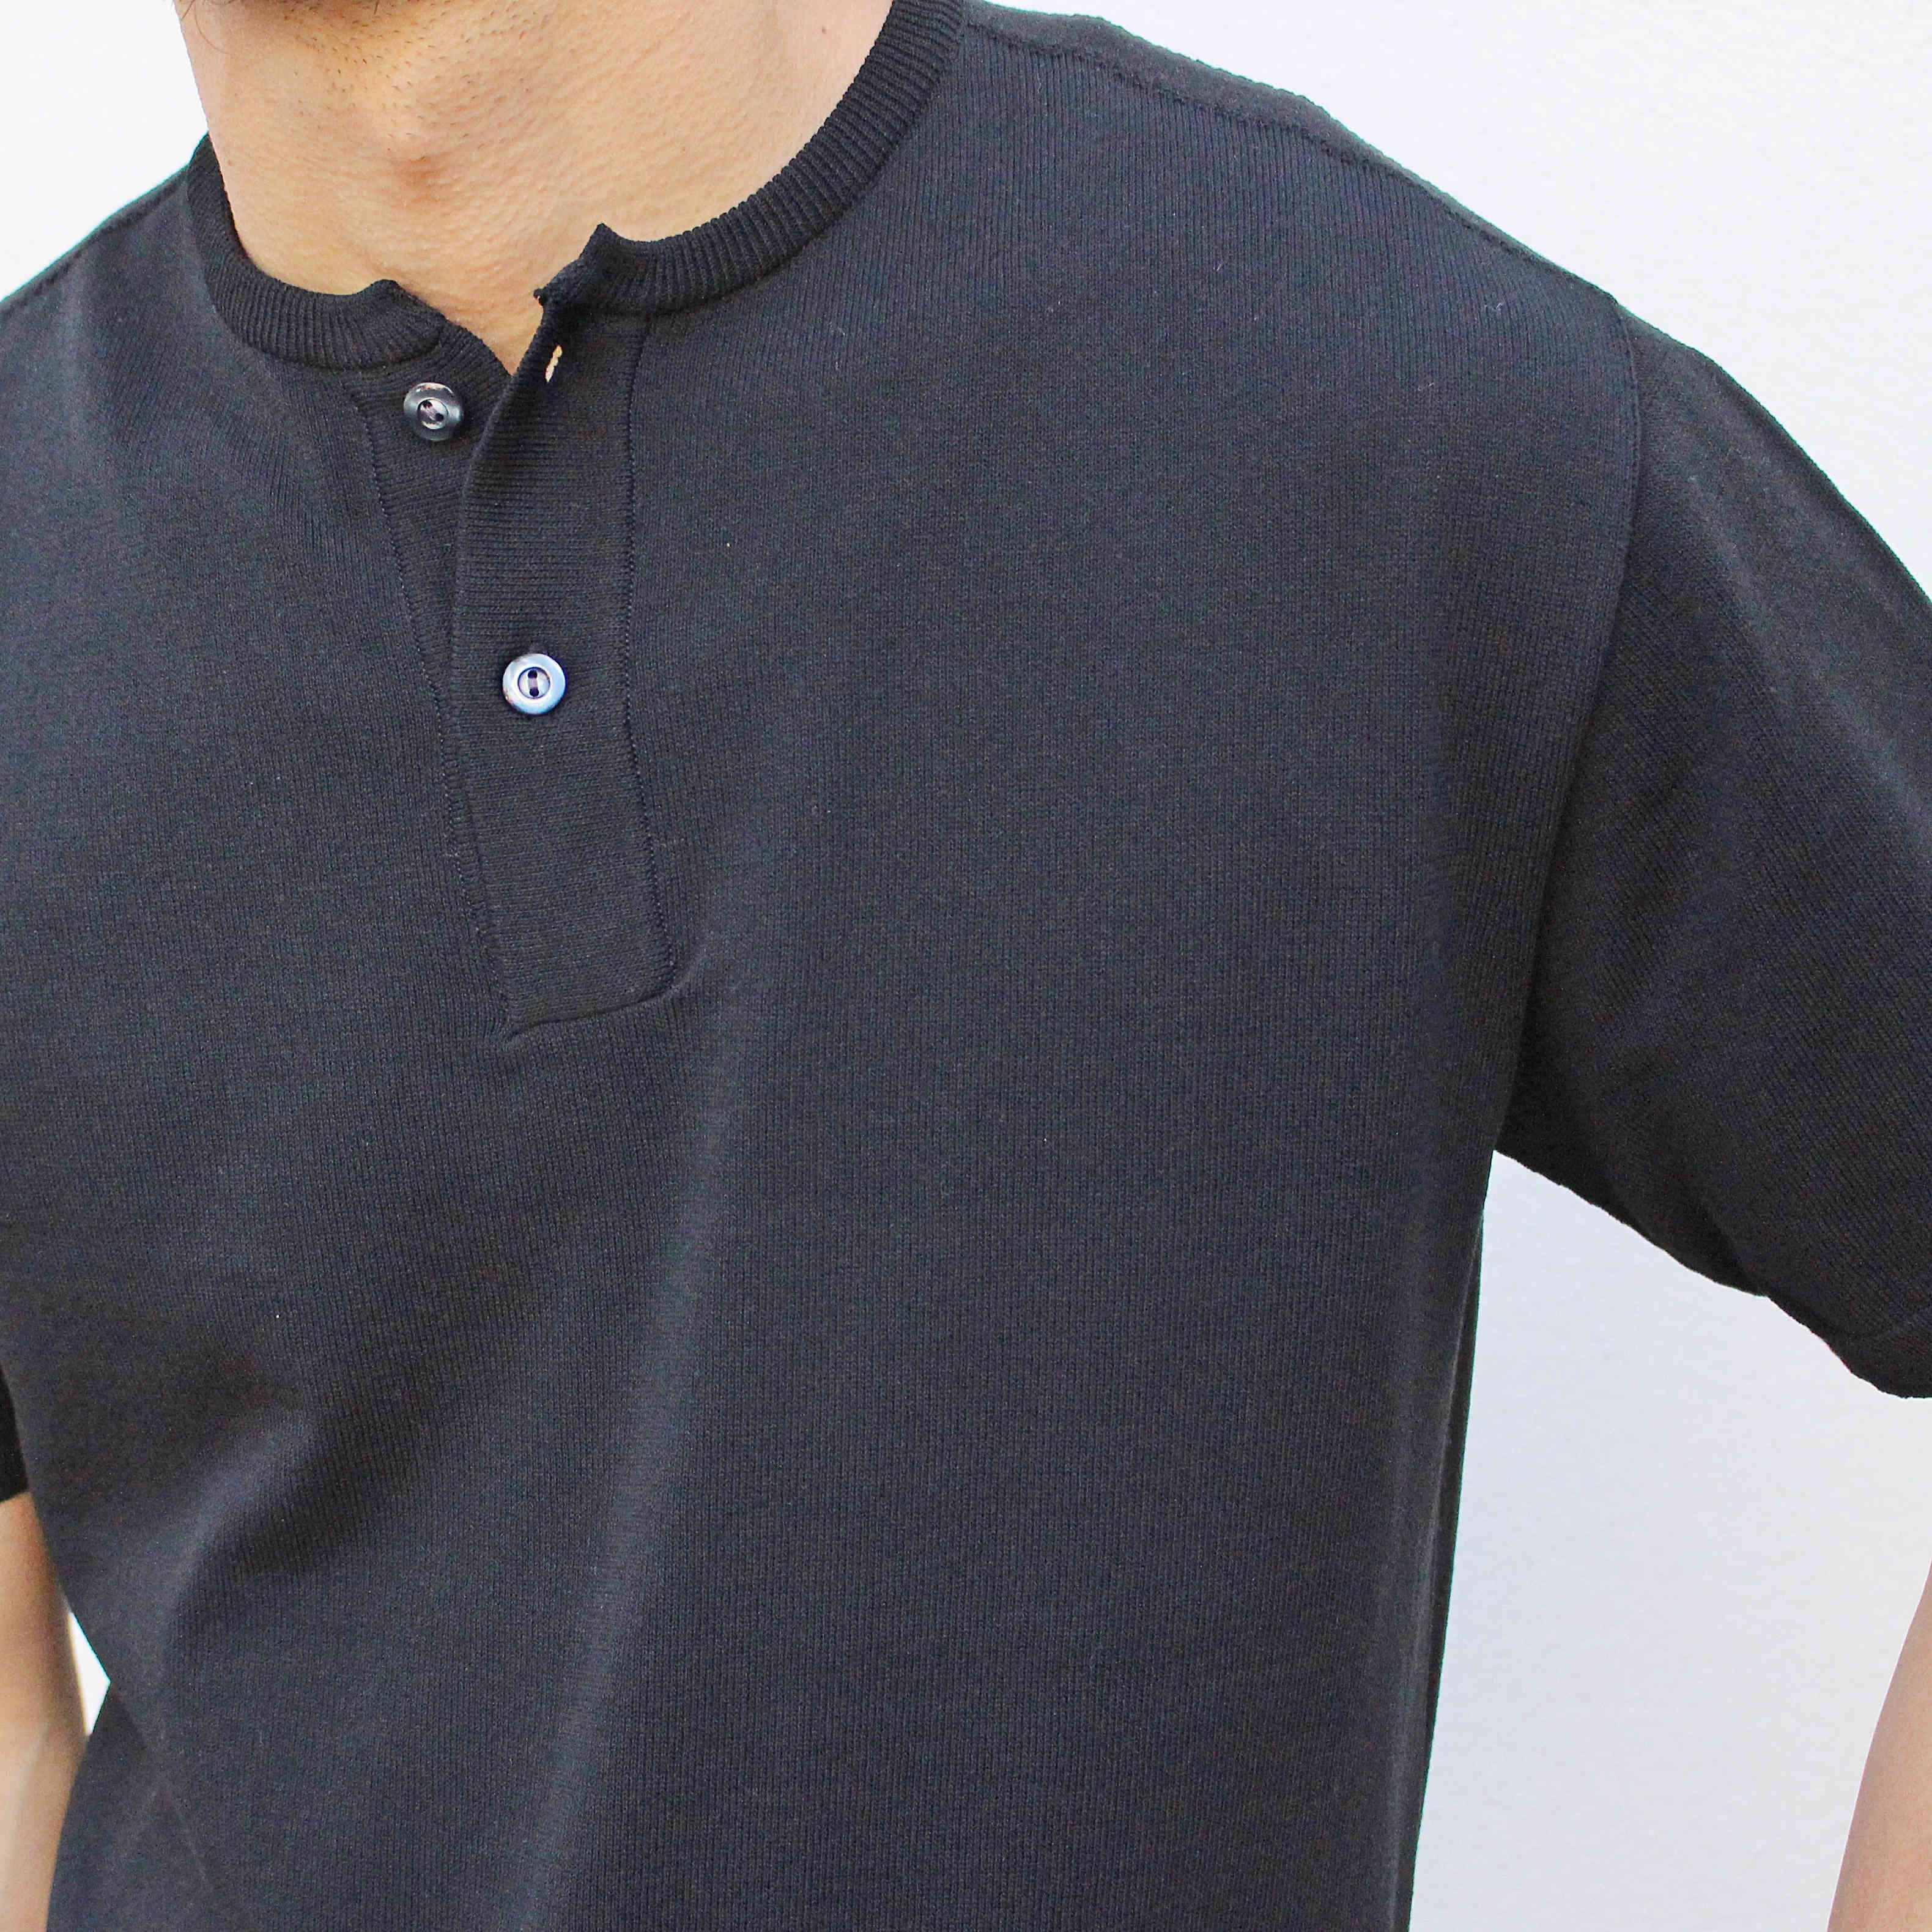 soglia ソリア / COTTON FIT Seamless Henley neck knit T-shirt (BLACK ブラック)